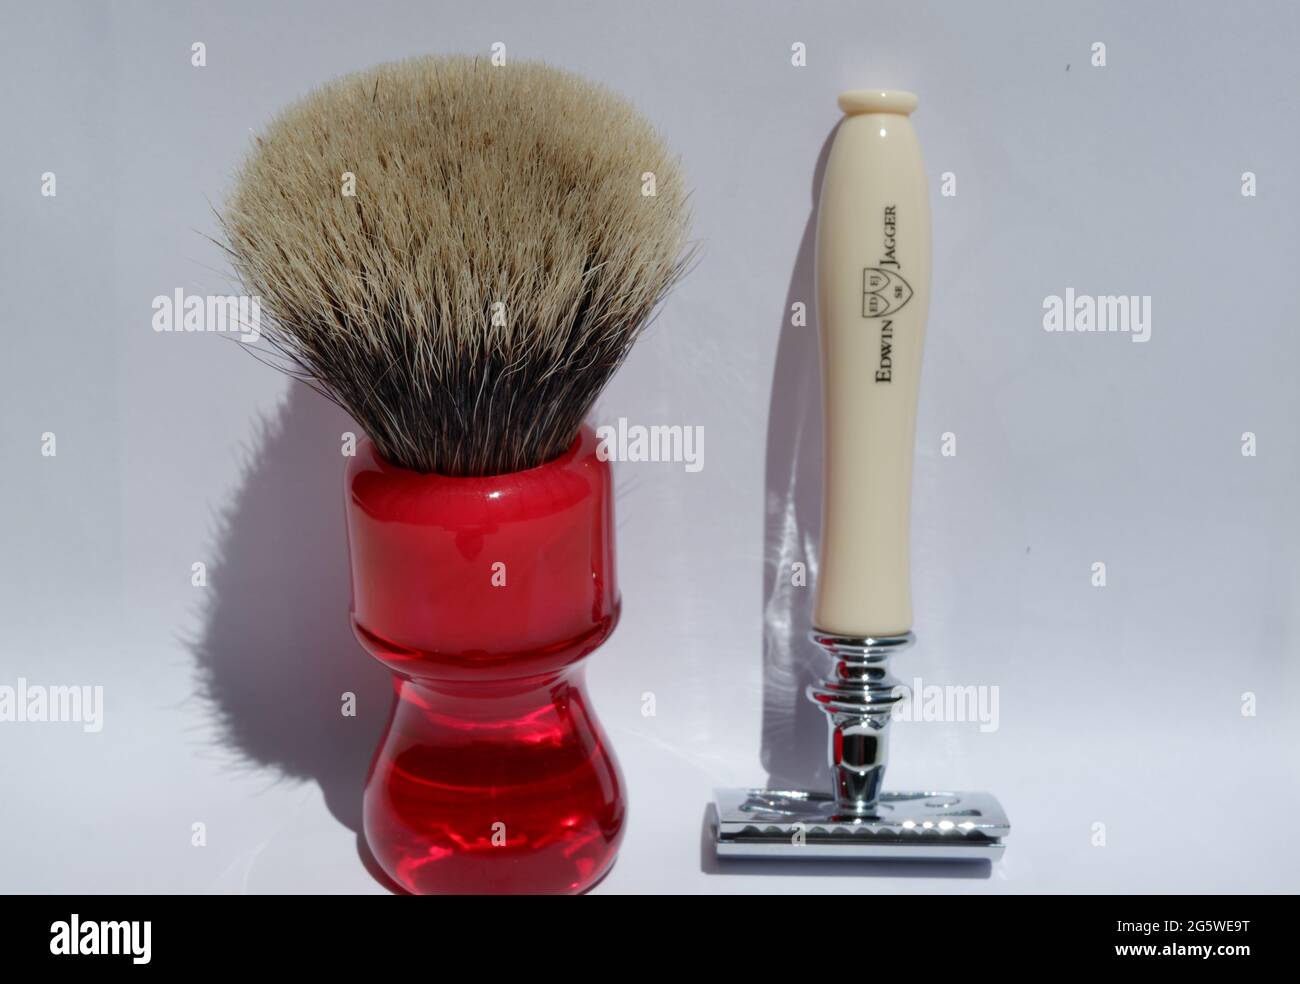 Edwin Jagger Chatsworth Imitation Ivory Double Edge Safety Razor with red pure badger shaving brush Stock Photo